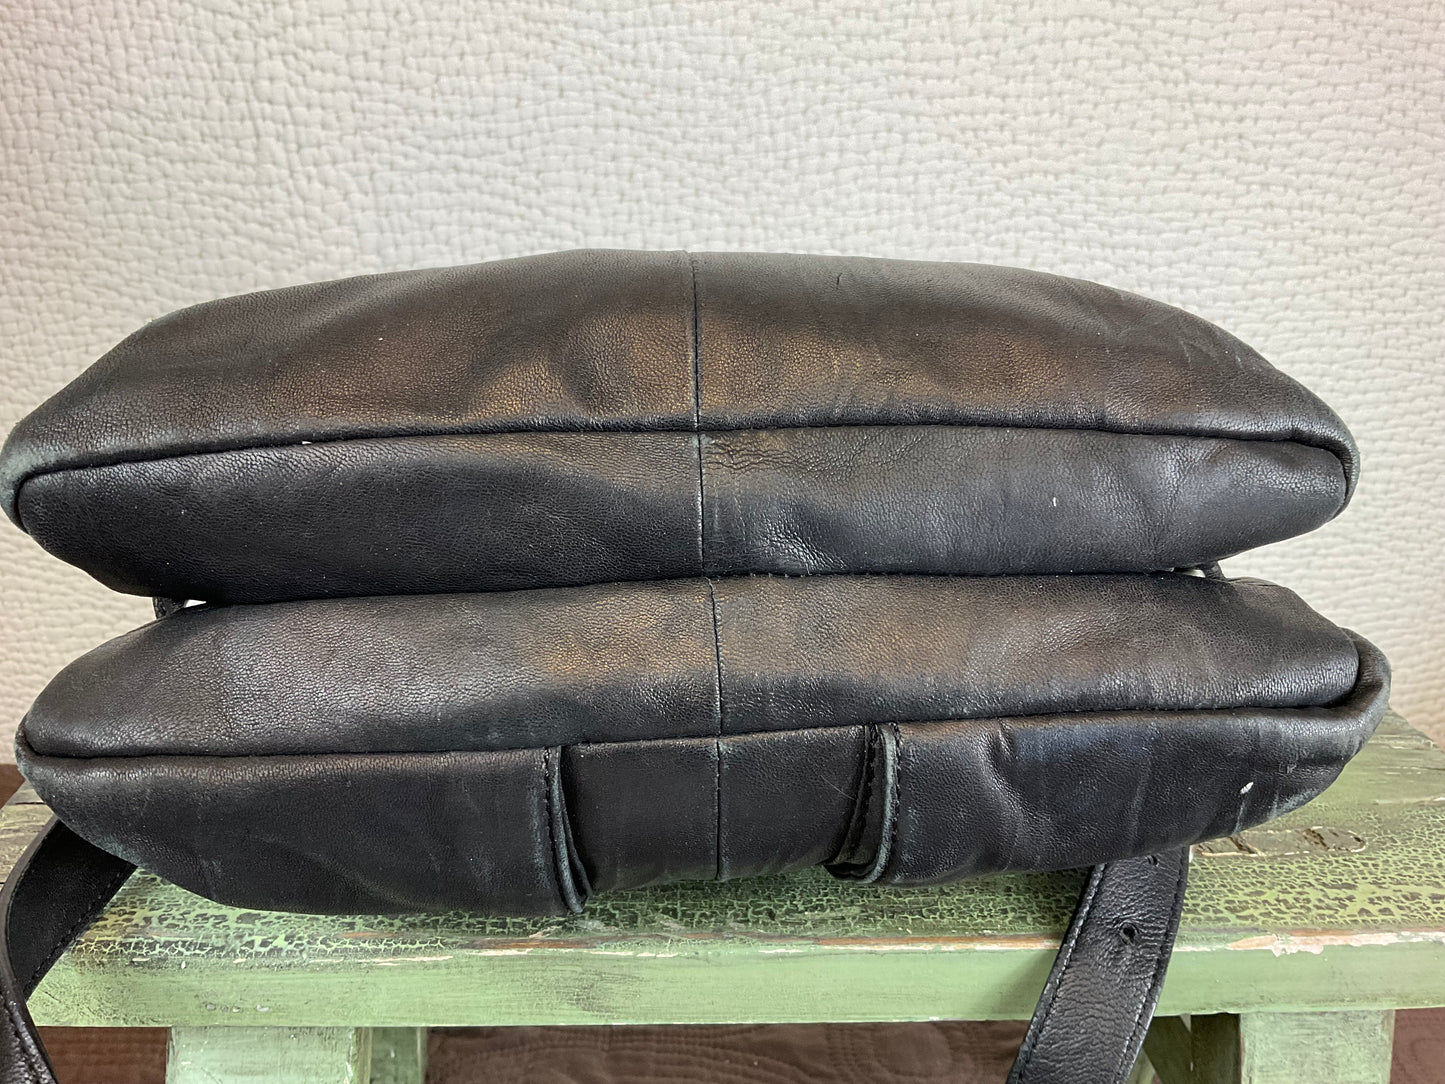 Black Perlina Leather Crossbody